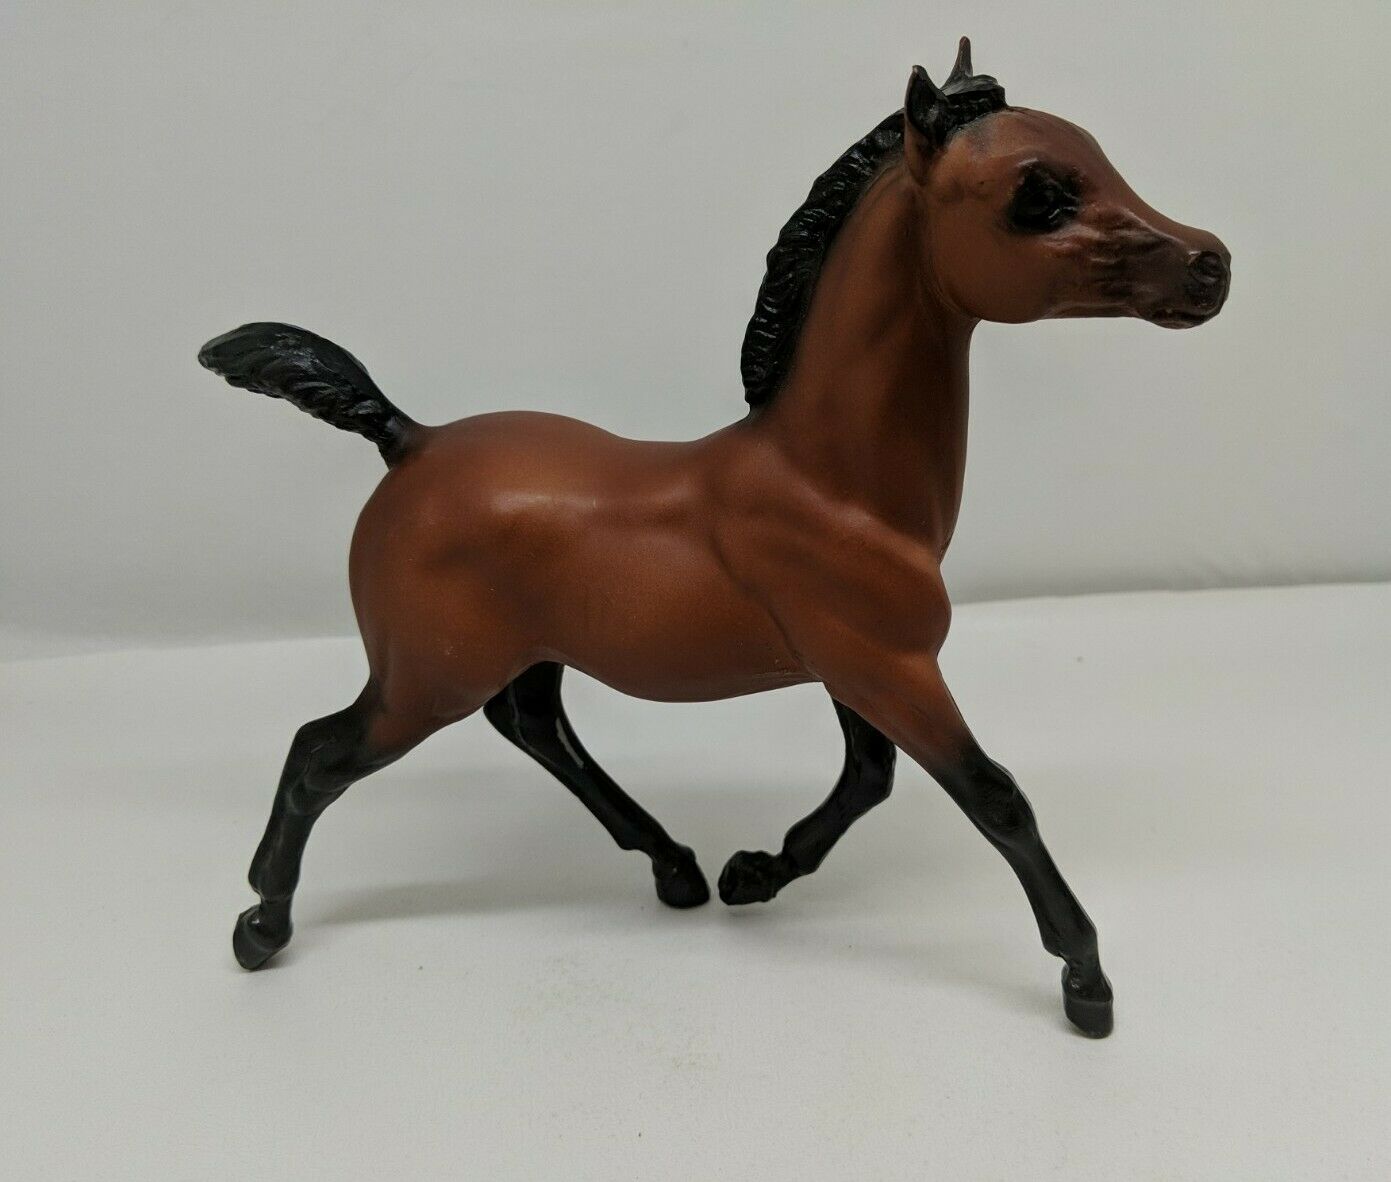 Breyer Pony Horse Little Bub - Young Justin Morgan #903 ©1990 With Original Box